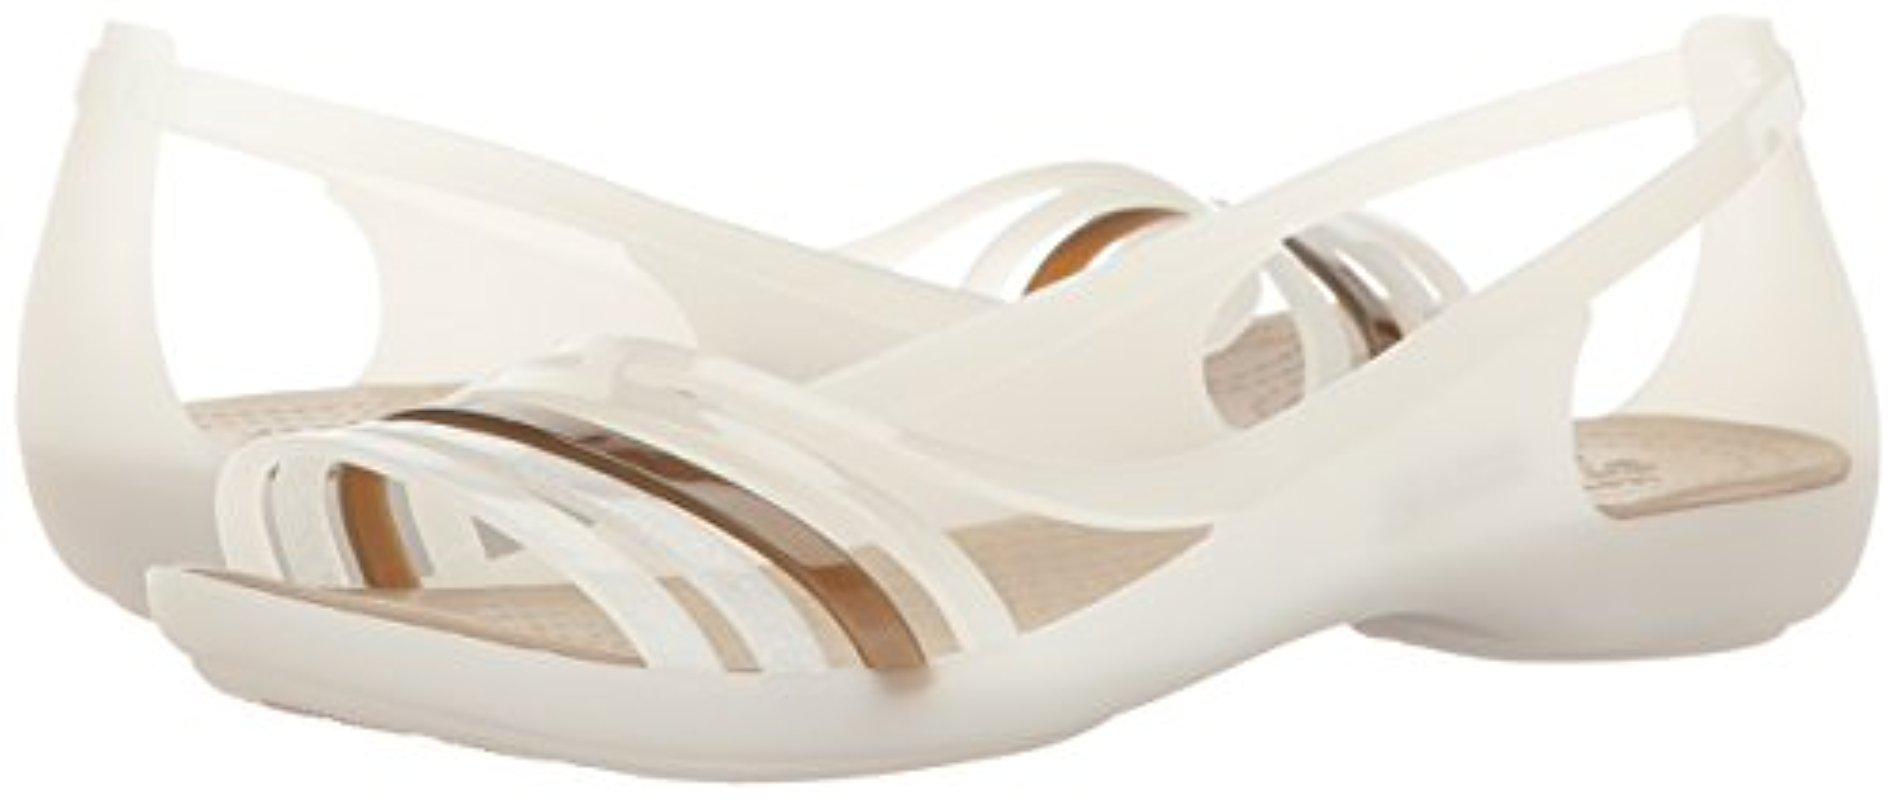 crocs women's isabella huarache flat jelly sandal